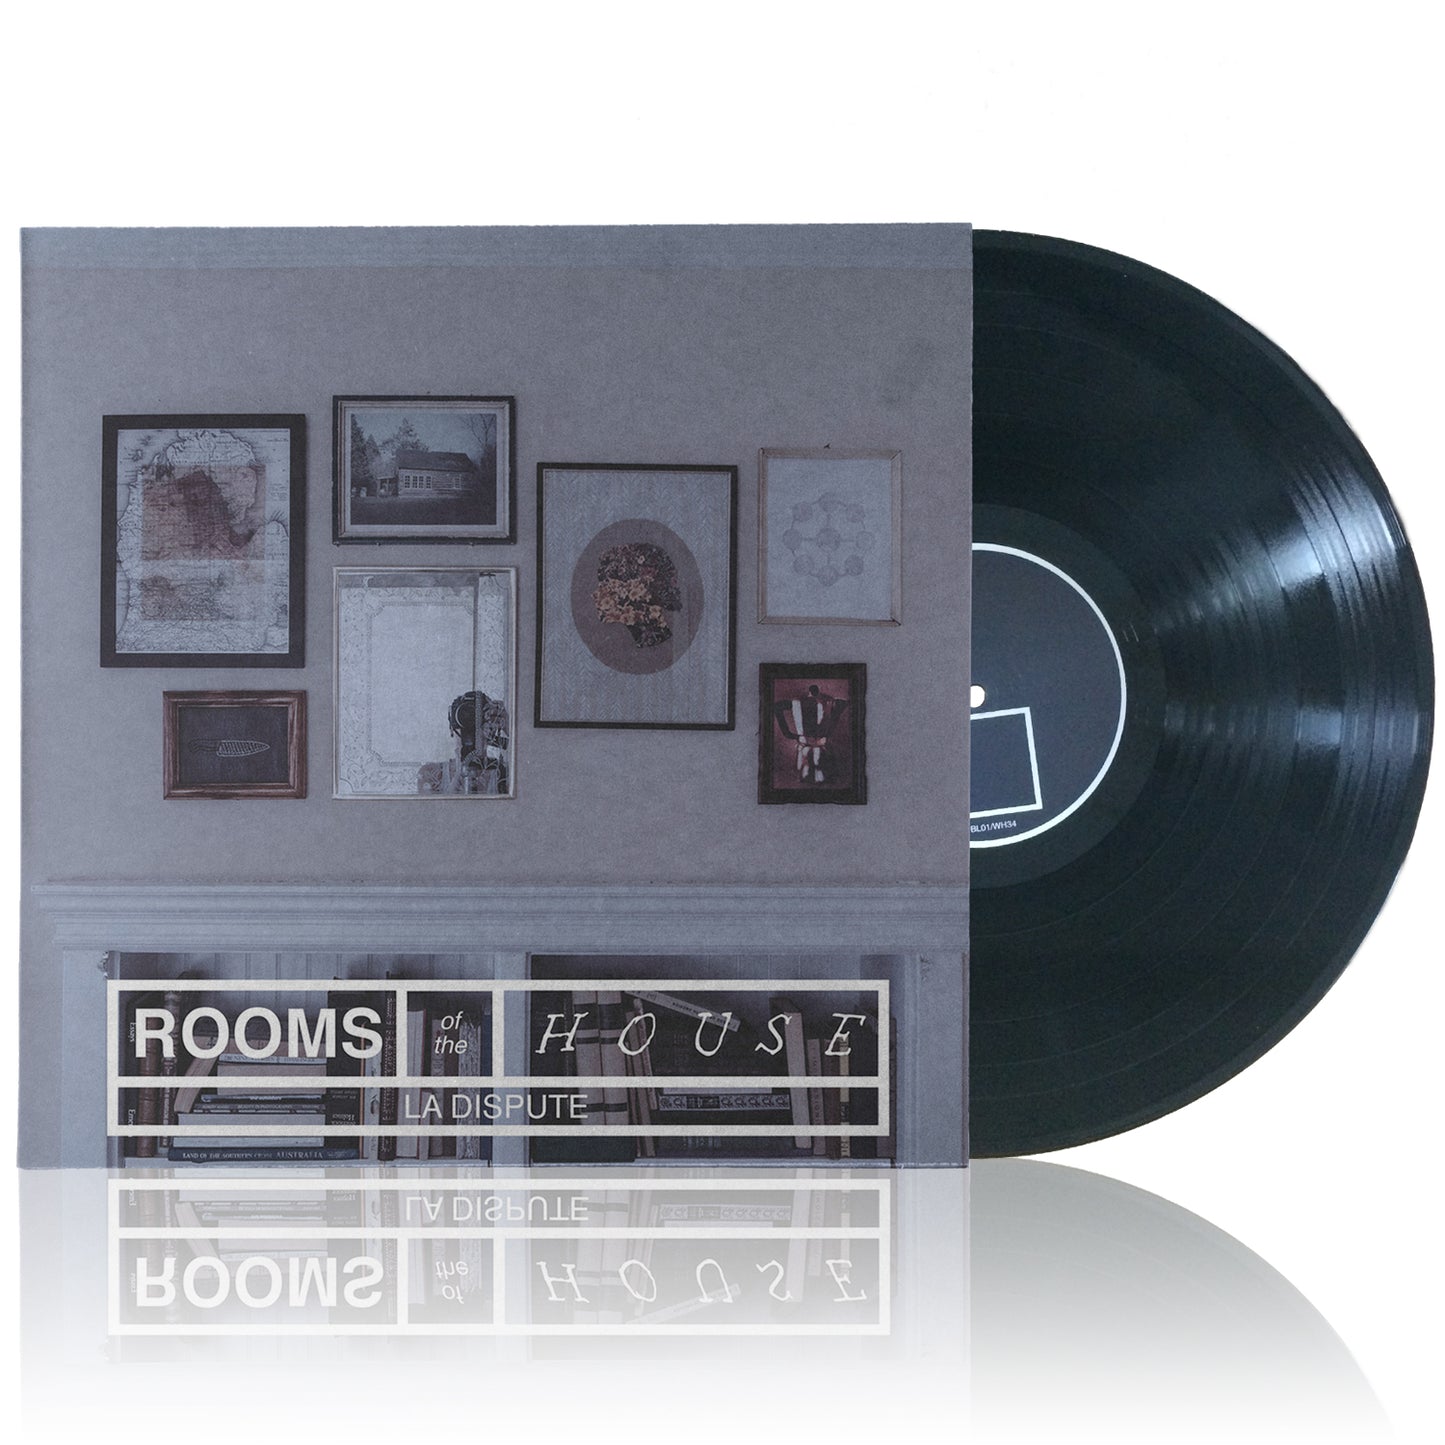 La Dispute - Rooms of the House (Black Vinyl)